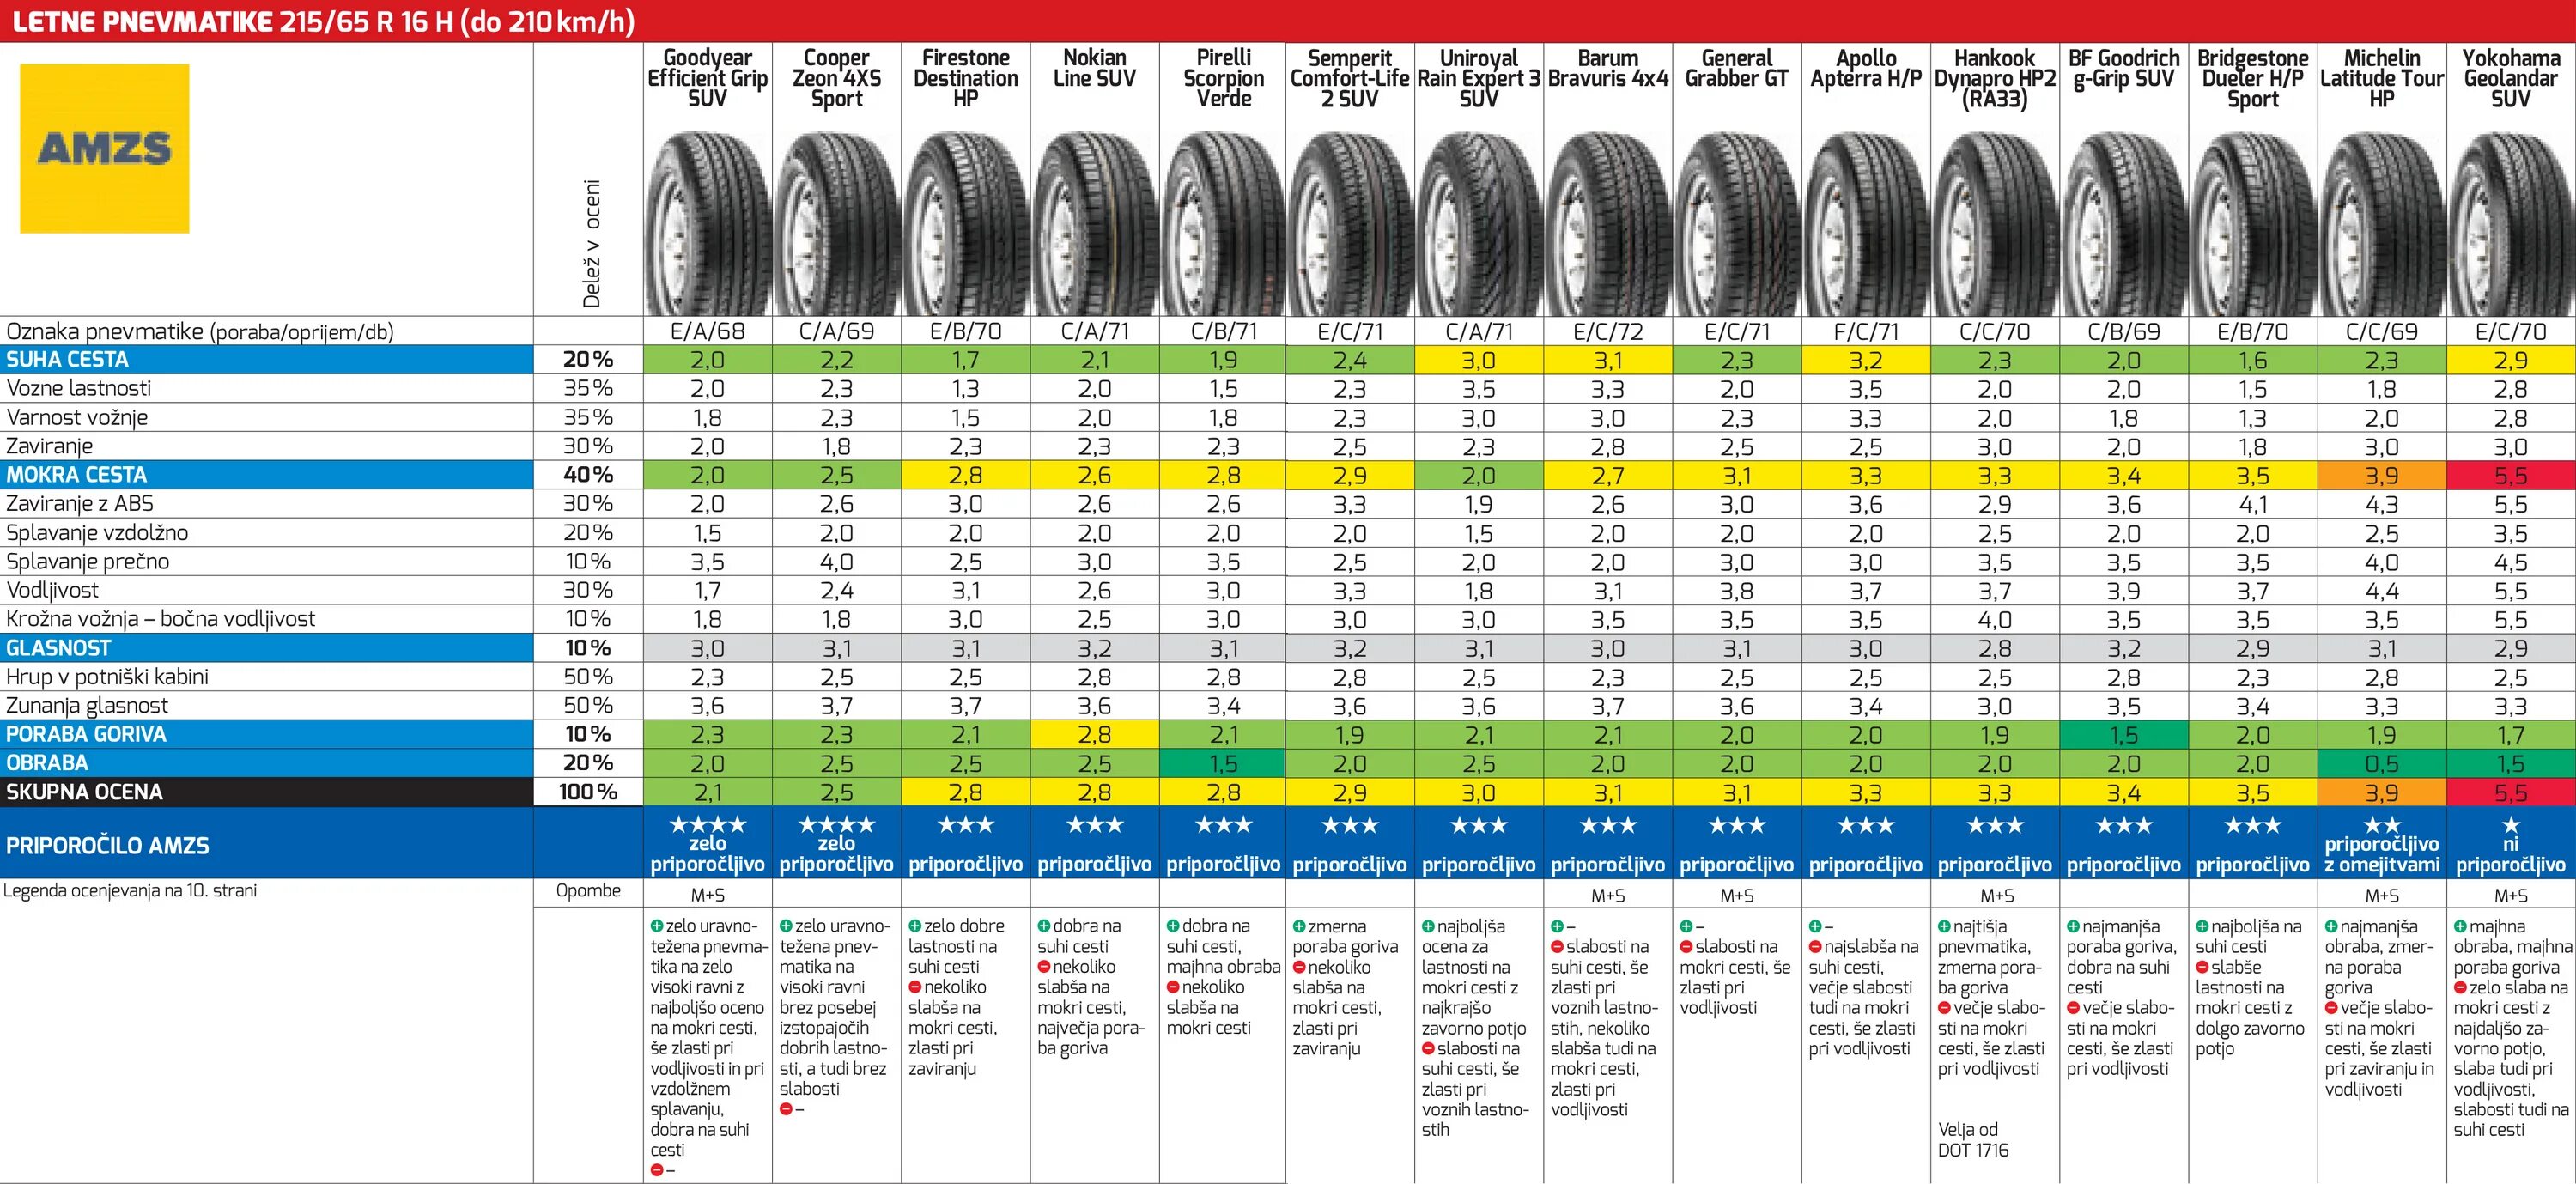 Вес шины 195/65 r15. 215/65 R16 аналоги размеров. Габариты шины 215/65 r16. Goodyear 215/60 r16 масса шины летние.